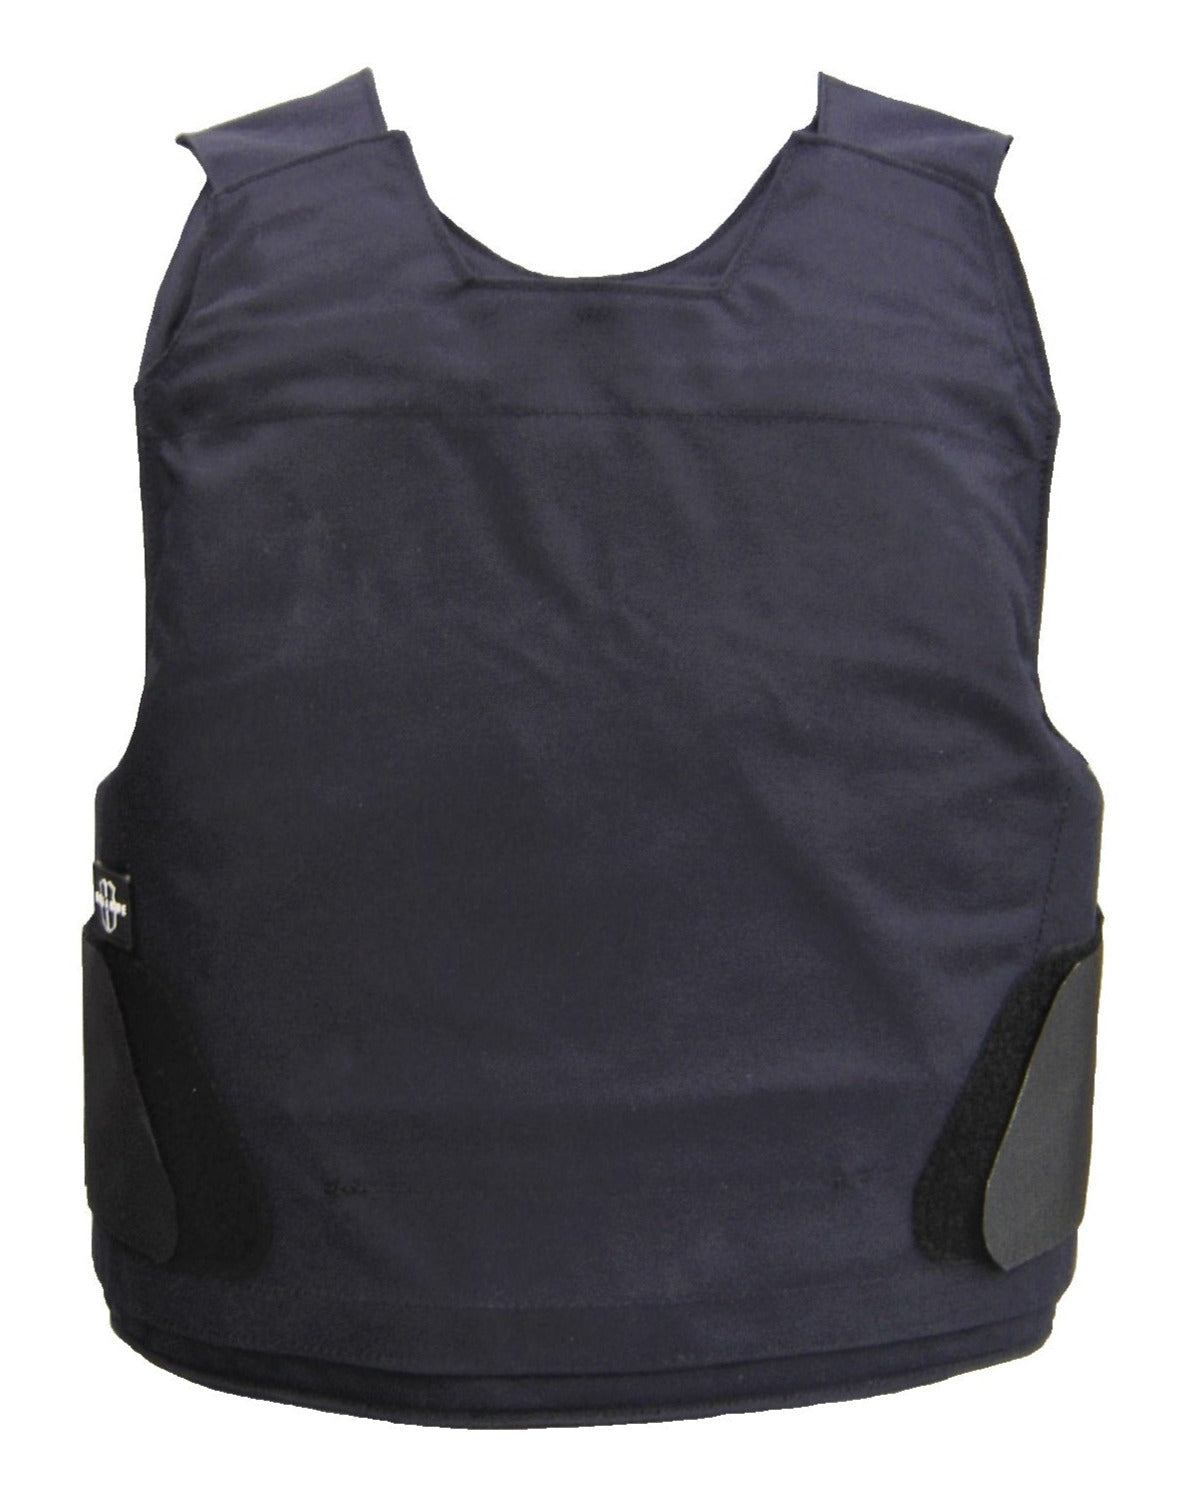 Cover Patrol carrier blue outer cover Engarde bulletproof vest